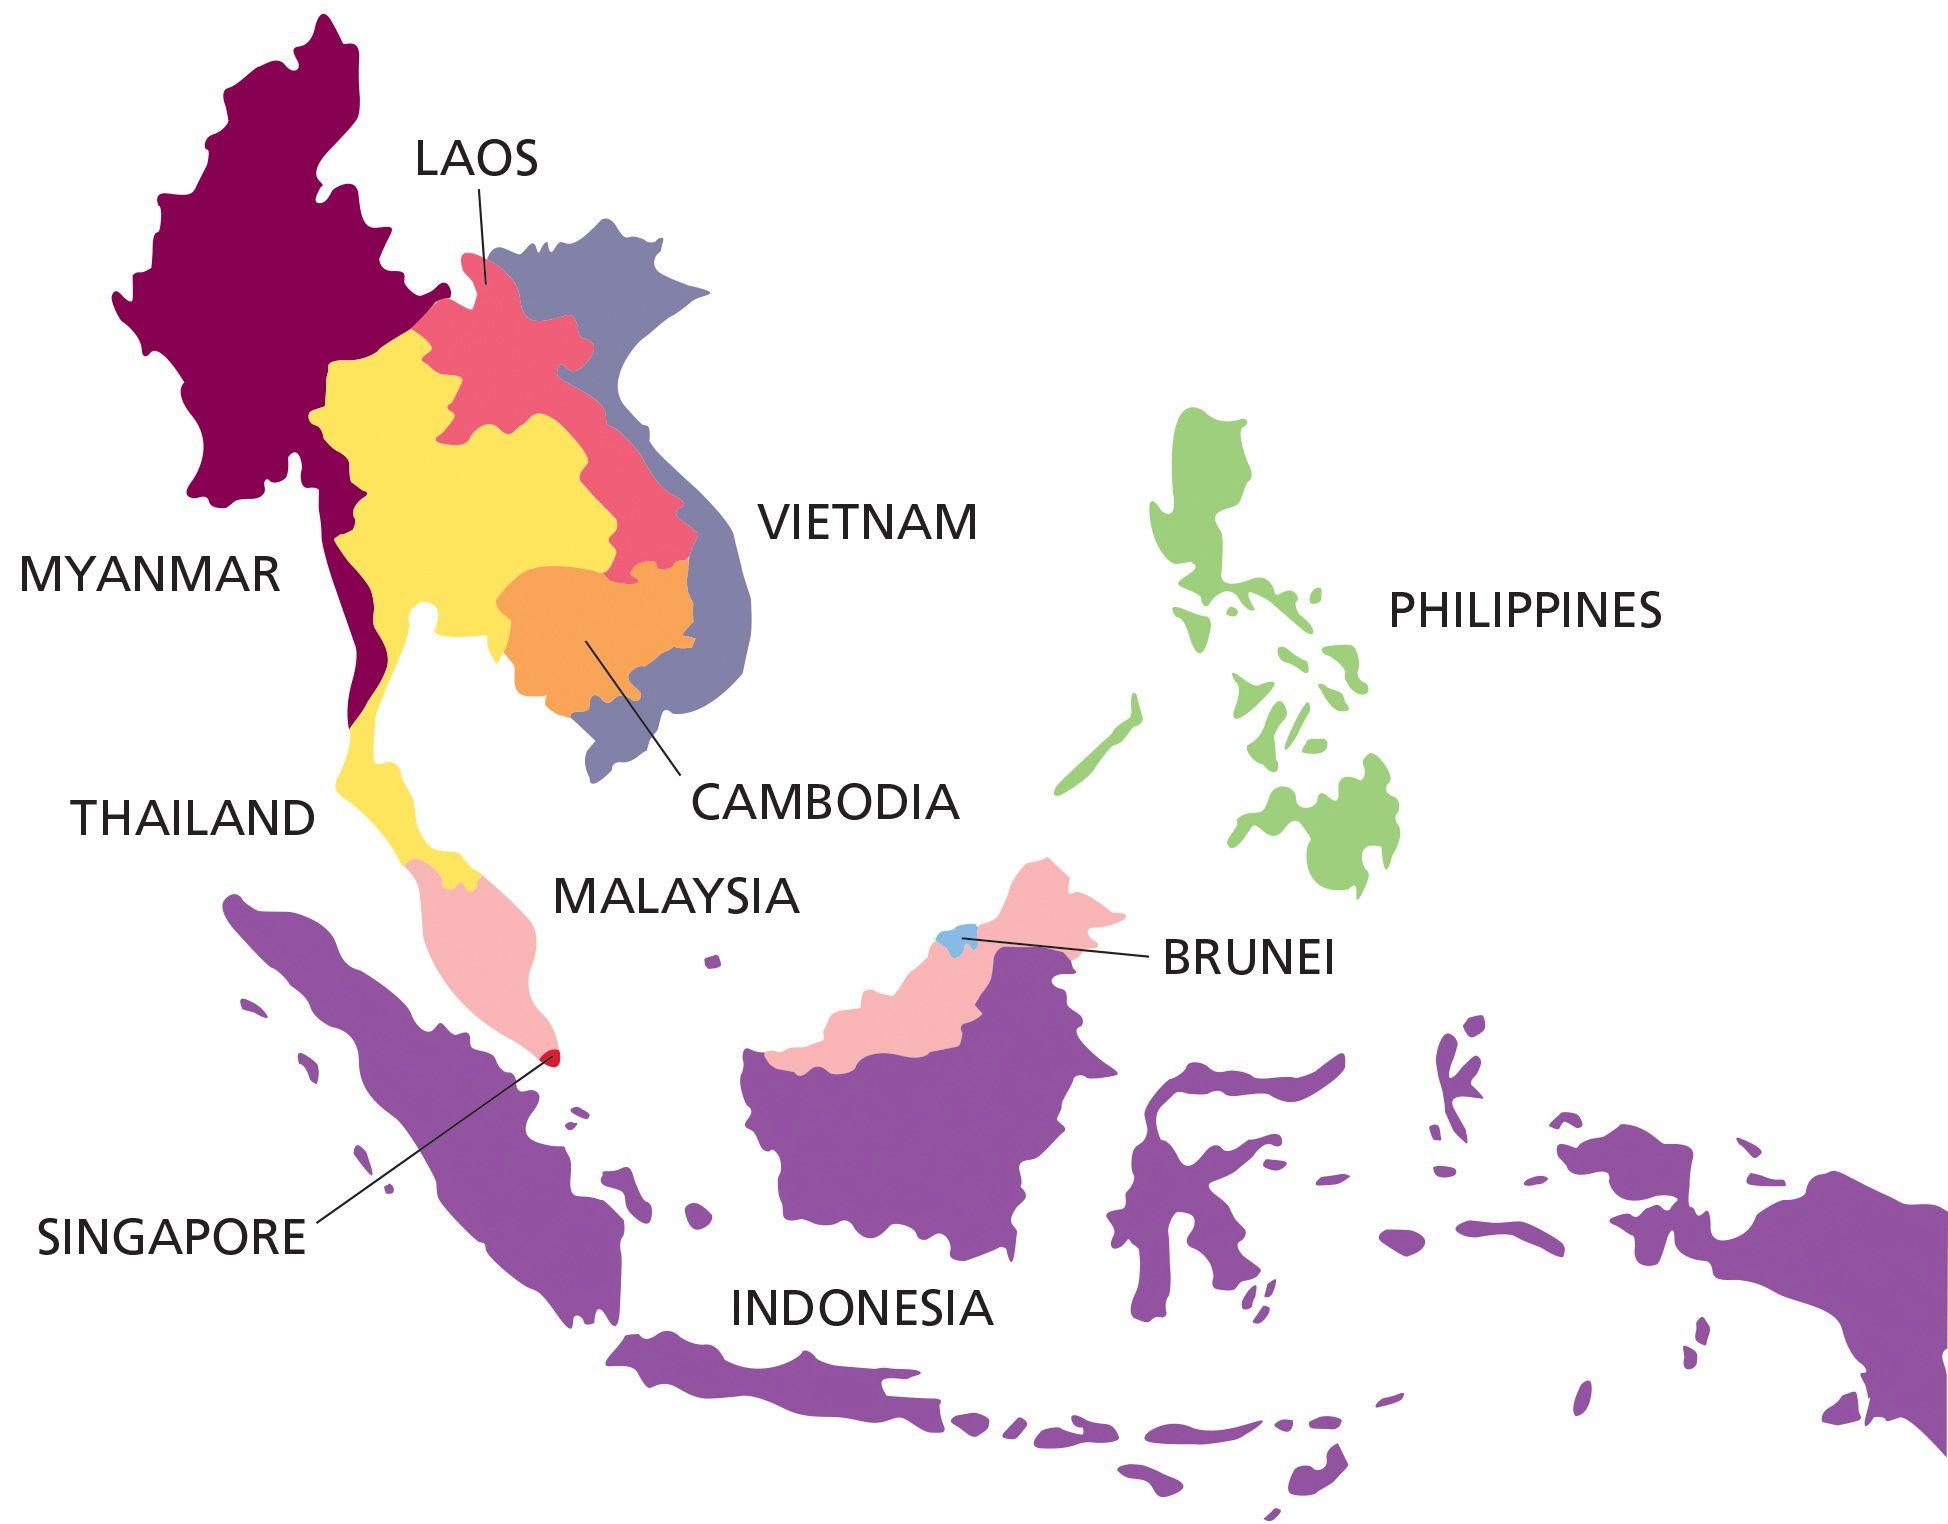 Малайзия индонезия индия. Юго-Восточная Азия на карте. Государства Юго Восточной Азии на карте. Ассоциация государств Юго-Восточной Азии на карте. Юновосточгая Азия карта.